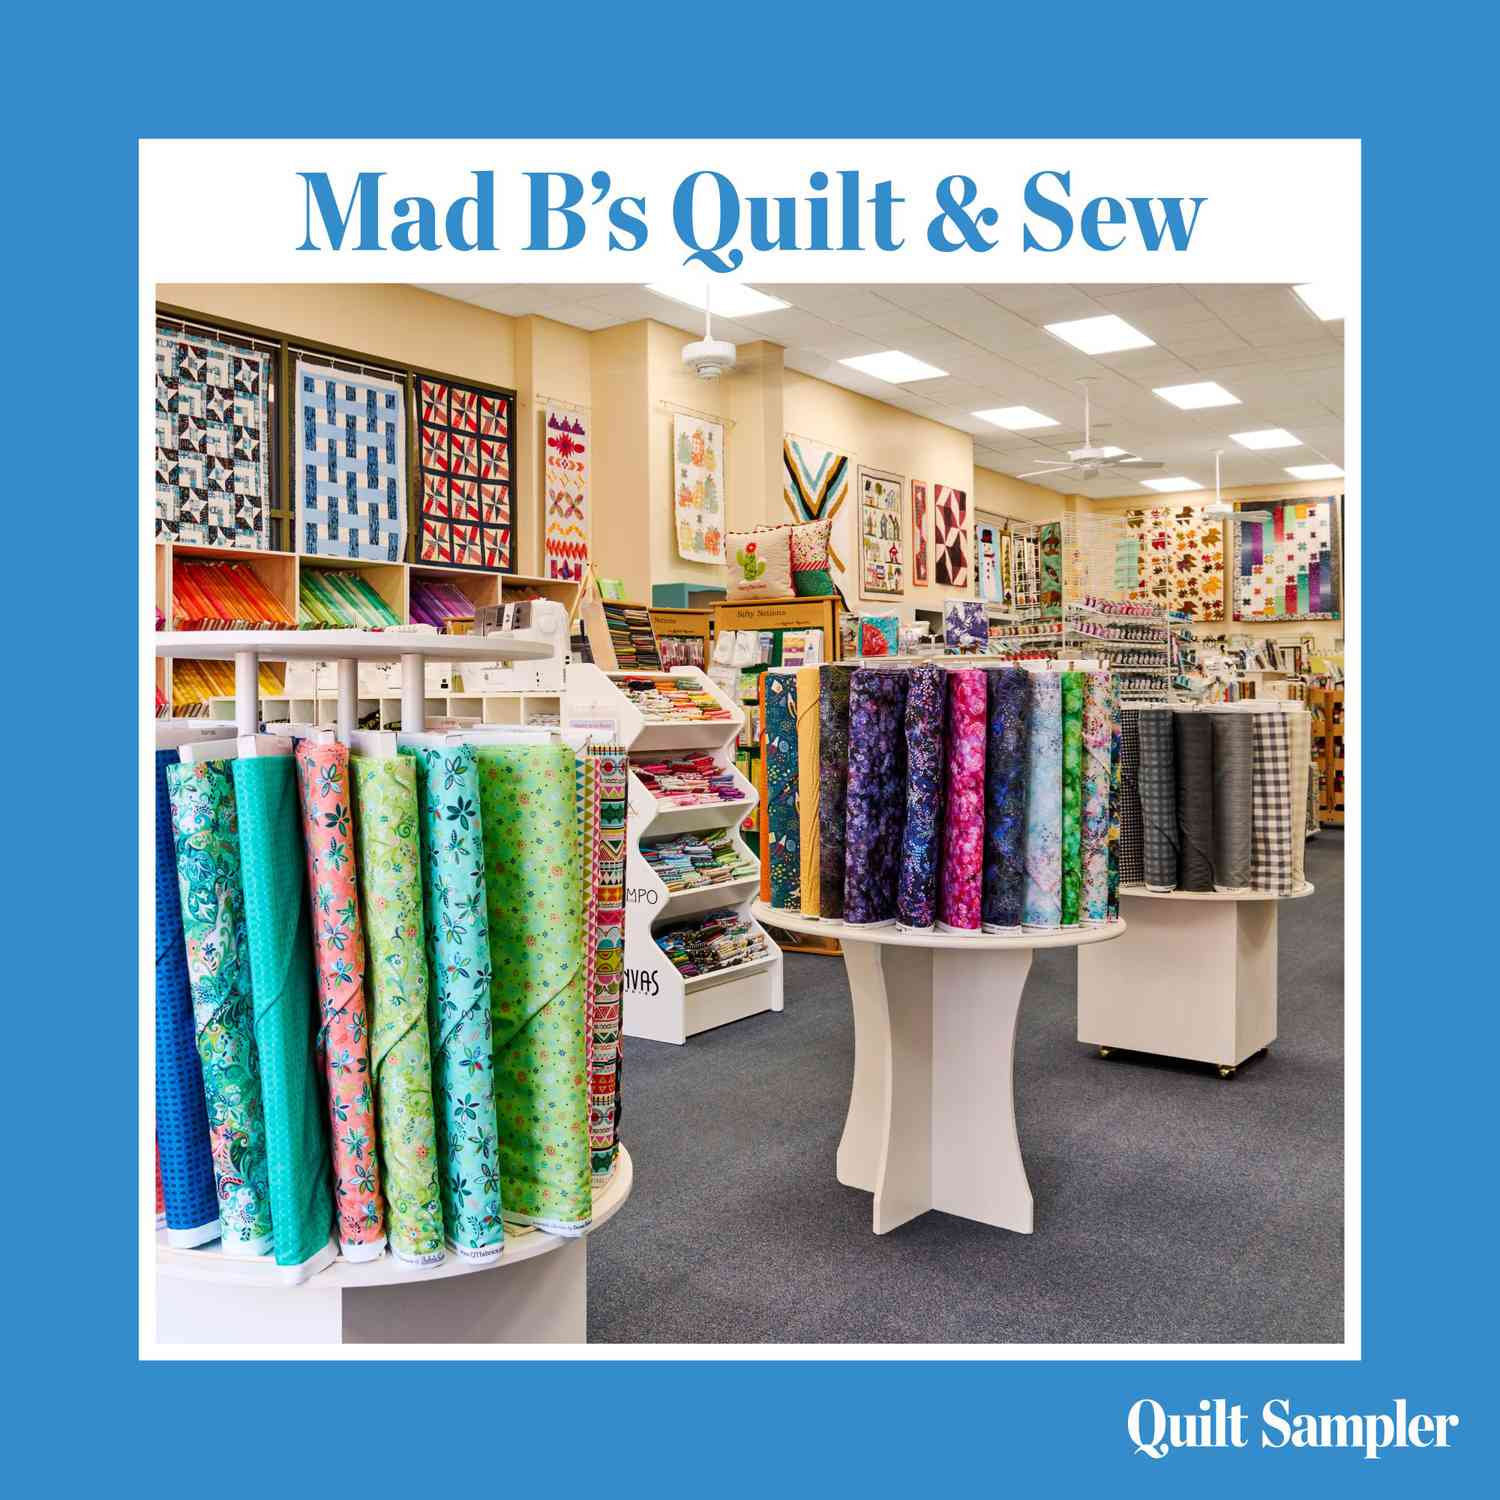 Mad B's Quilt & Sew